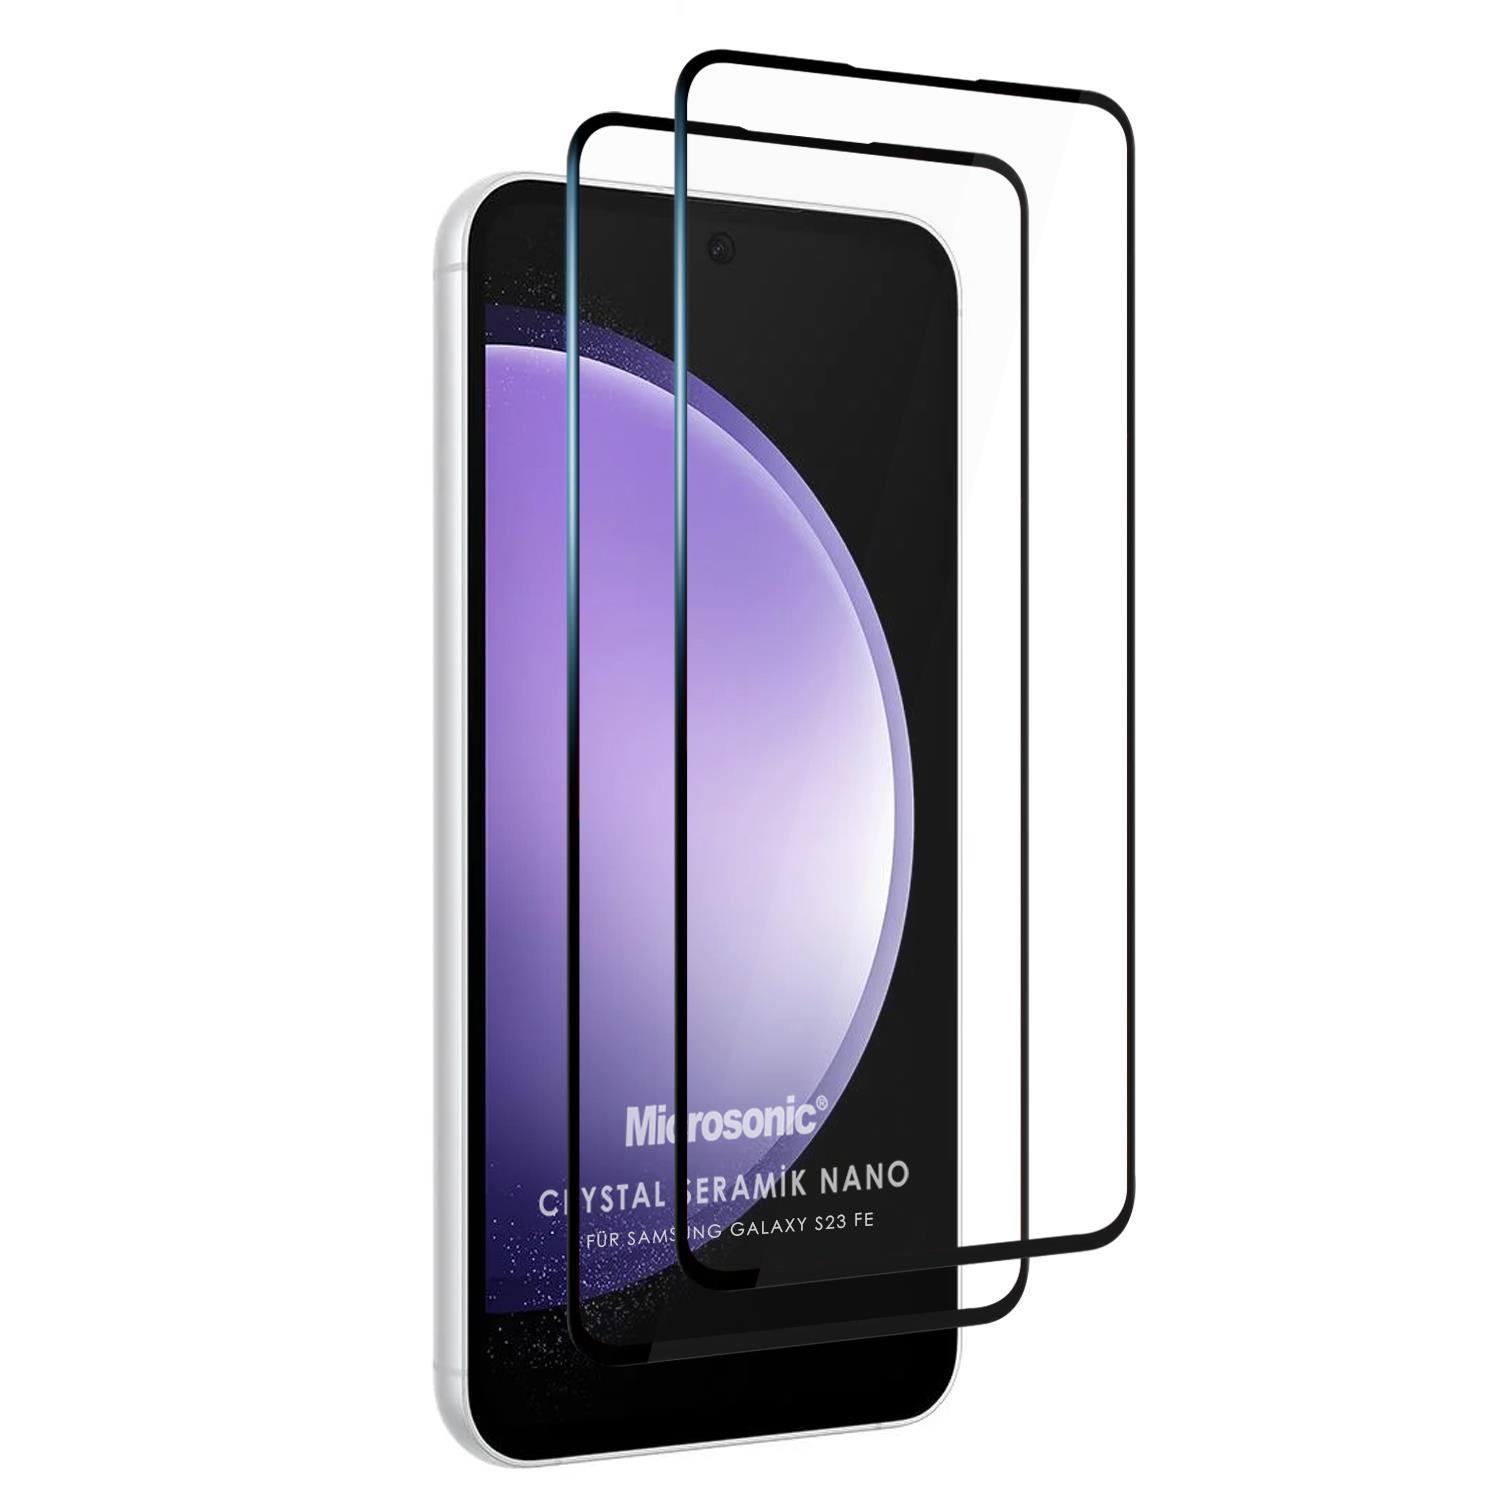 Microsonic Samsung Galaxy S23 FE Crystal Seramik Nano Ekran Koruyucu Siyah 2 Adet